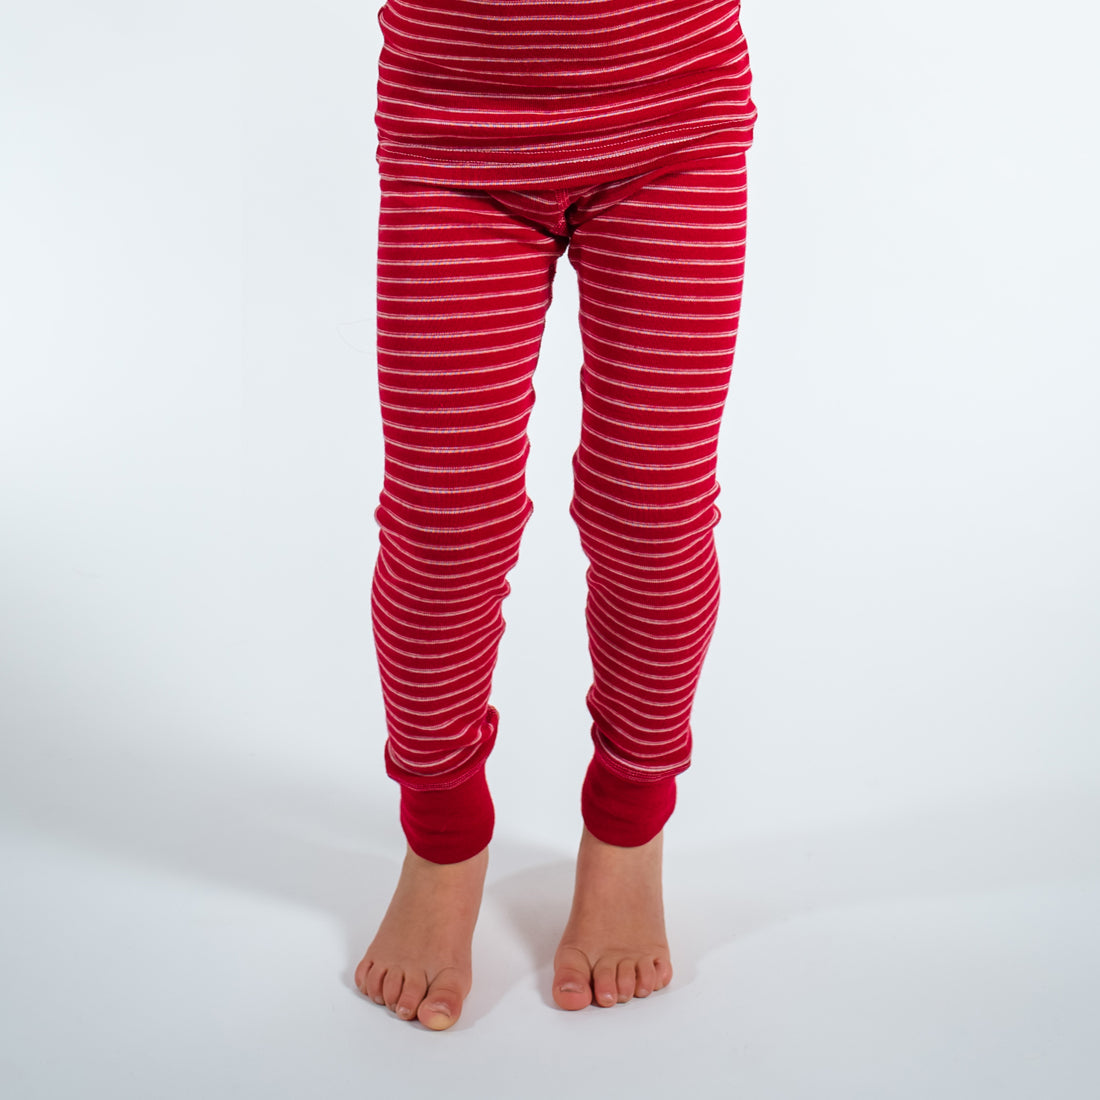 Hocosa Long Underwear Pants in Organic Merino Wool – Danish Woolen